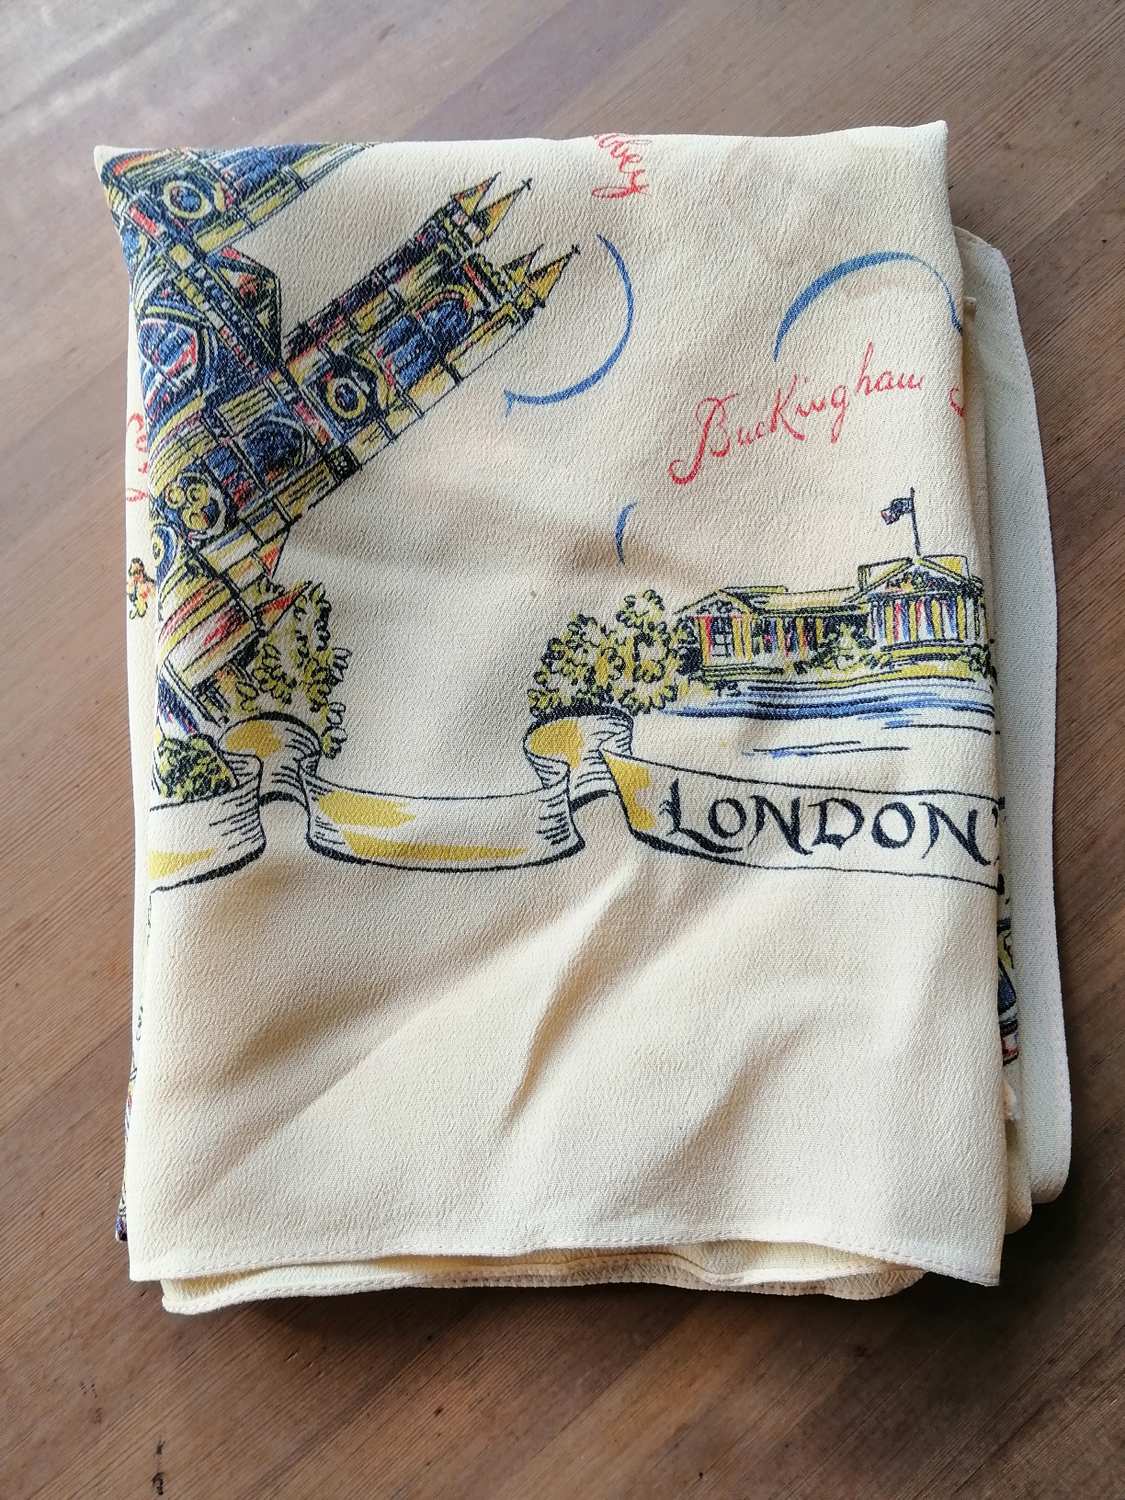 Vintage scarf scarves sjal från London havregul med London-motiv